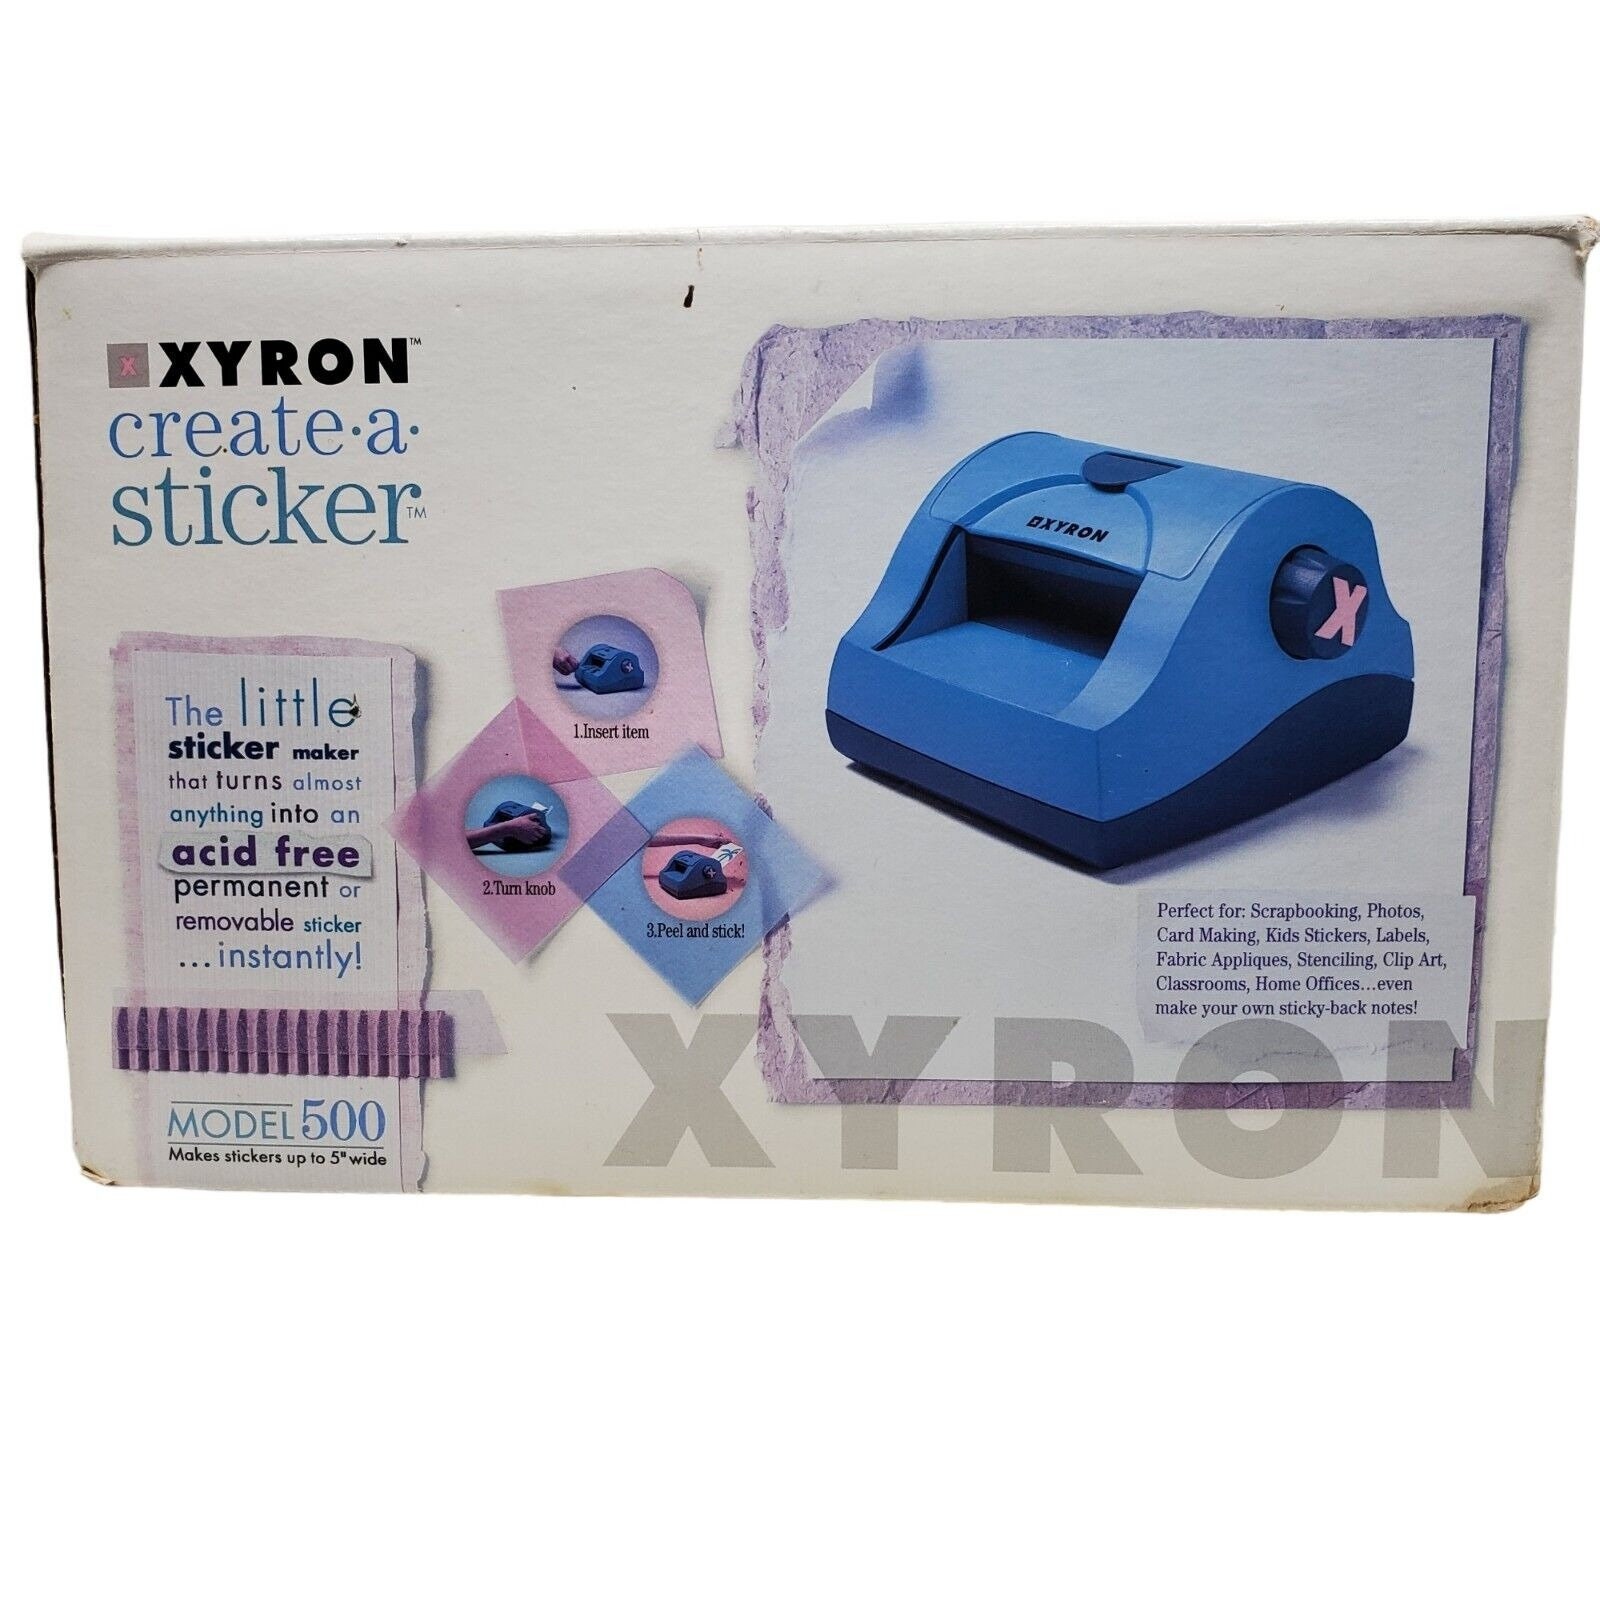  Xyron Create-a-Sticker, 5 Sticker and Label Maker